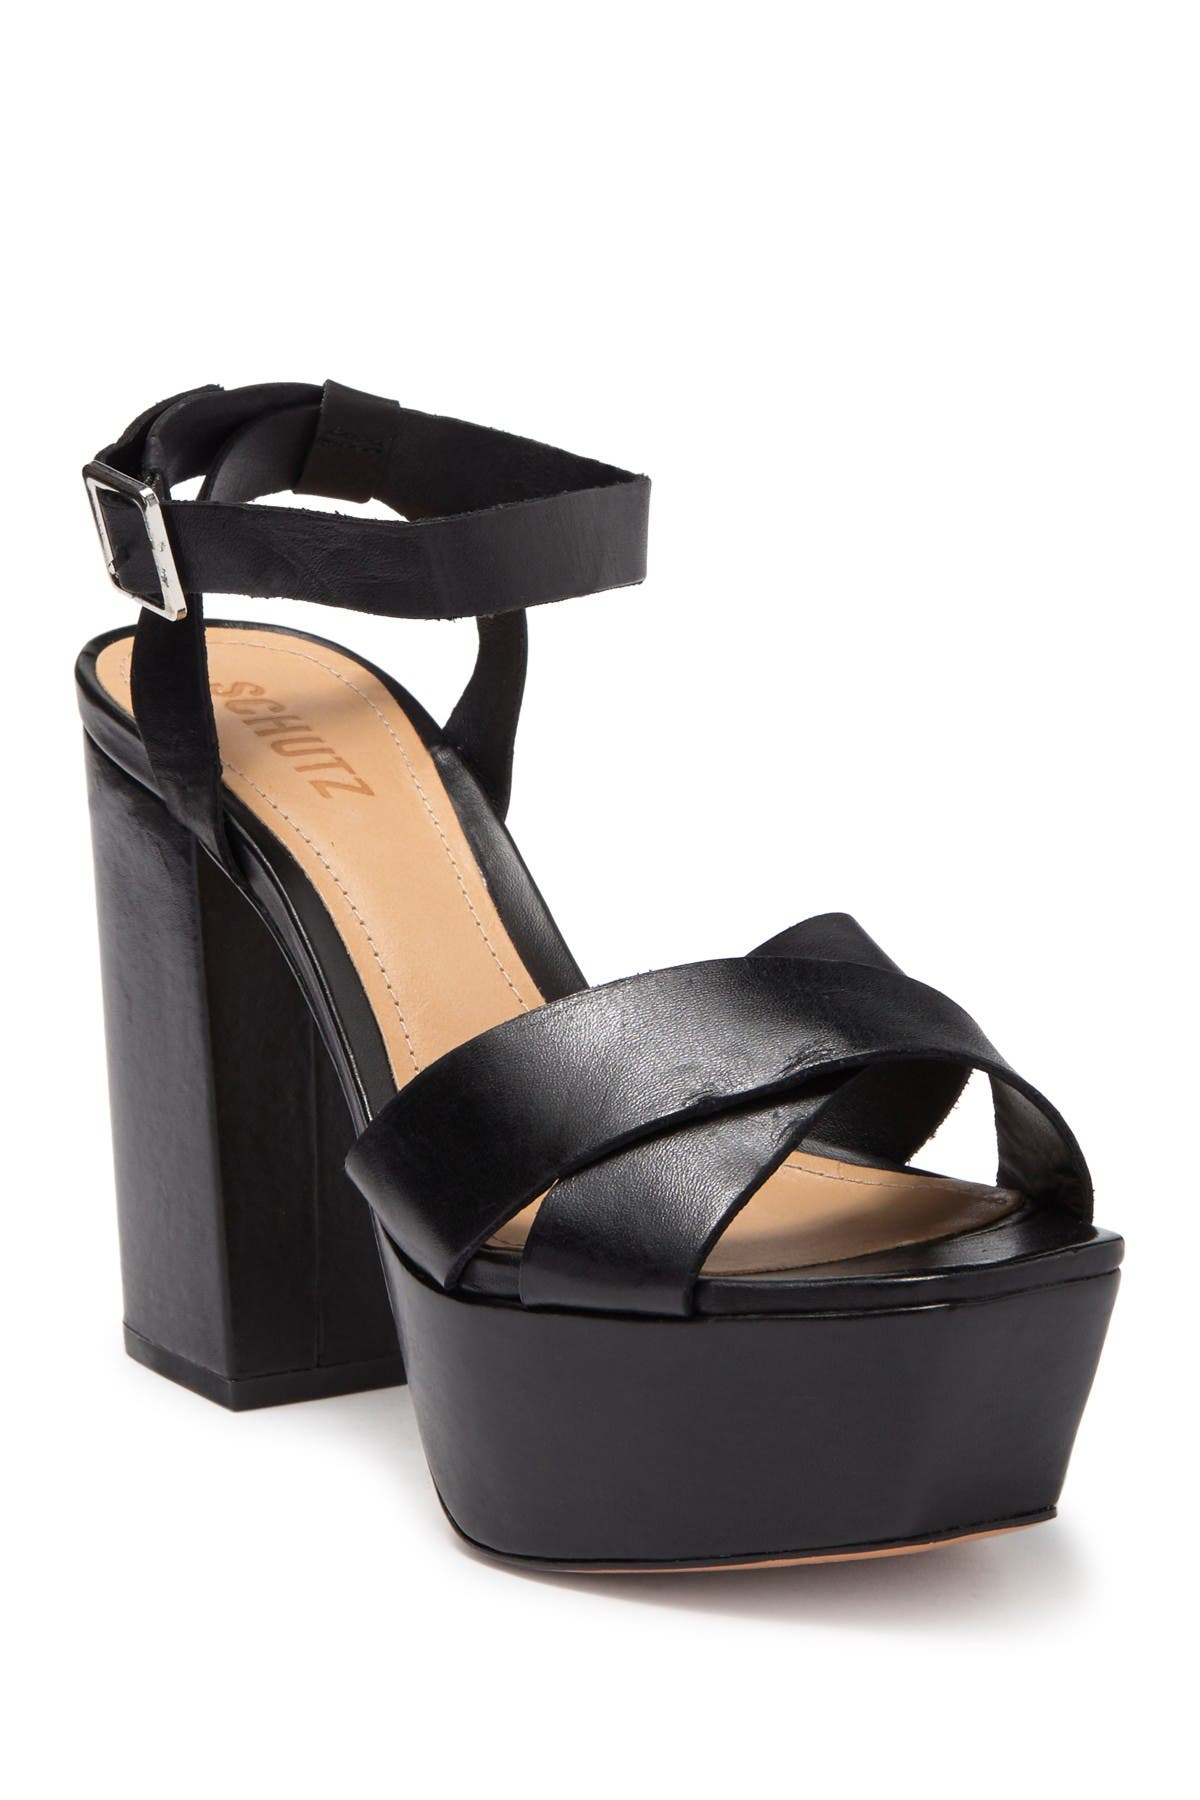 schutz saphire platform heels